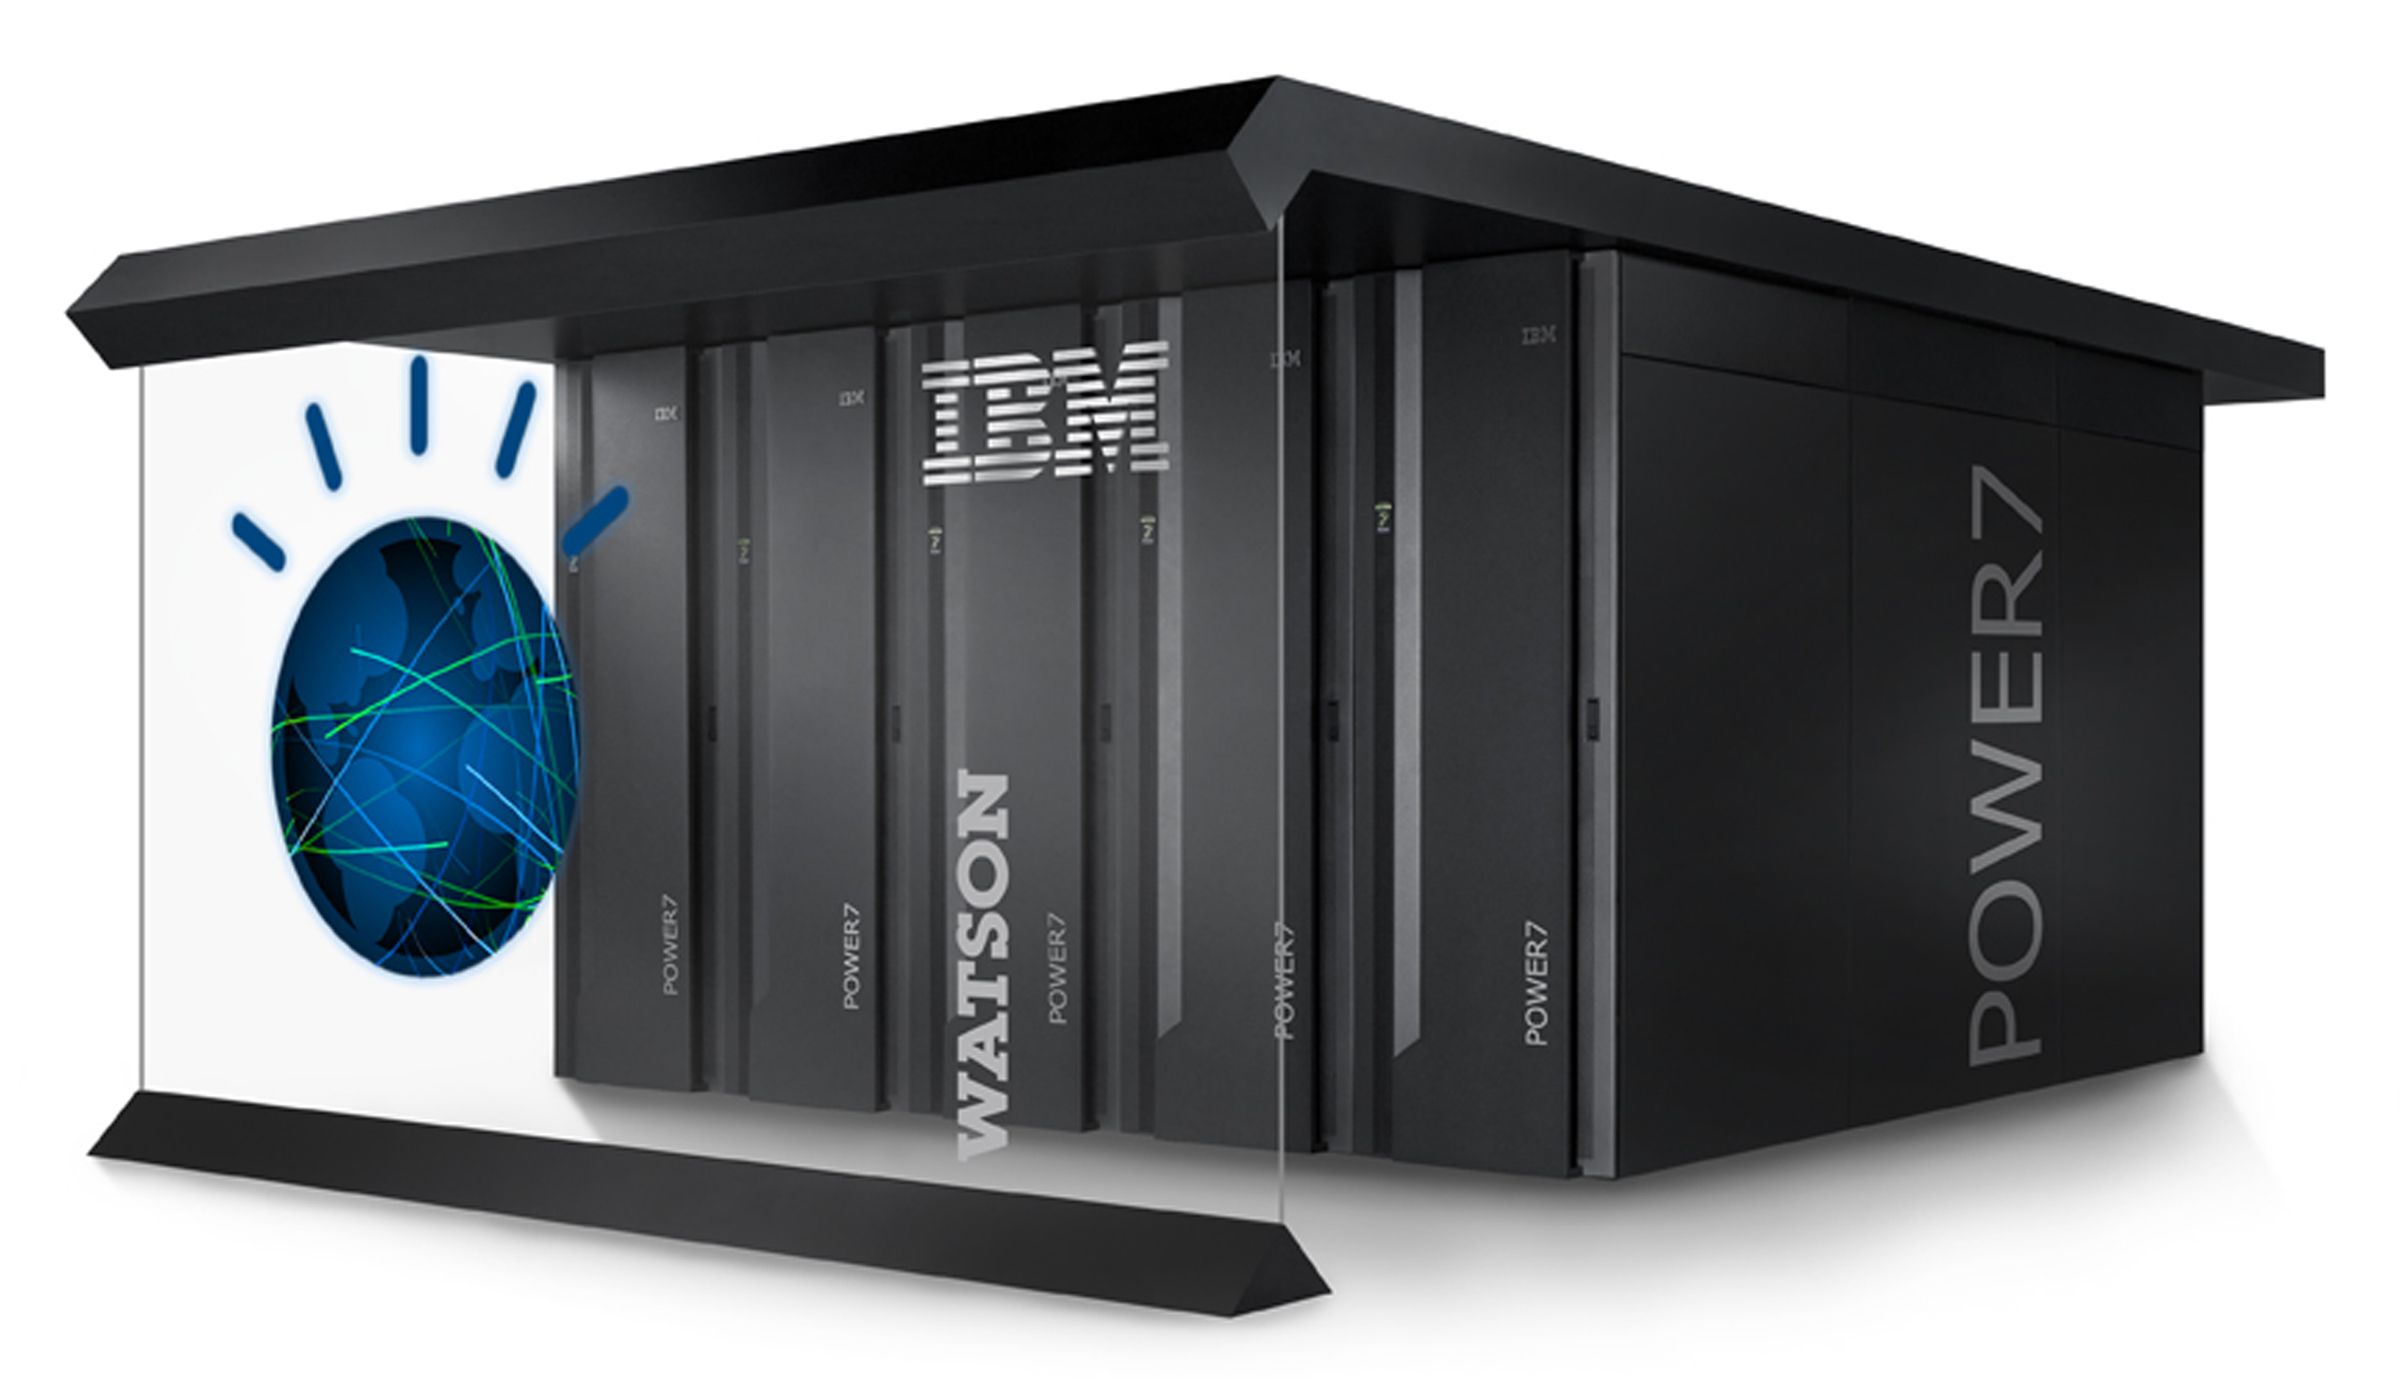 Компьютер IBM Watson диагностирует, как доктор Хаус